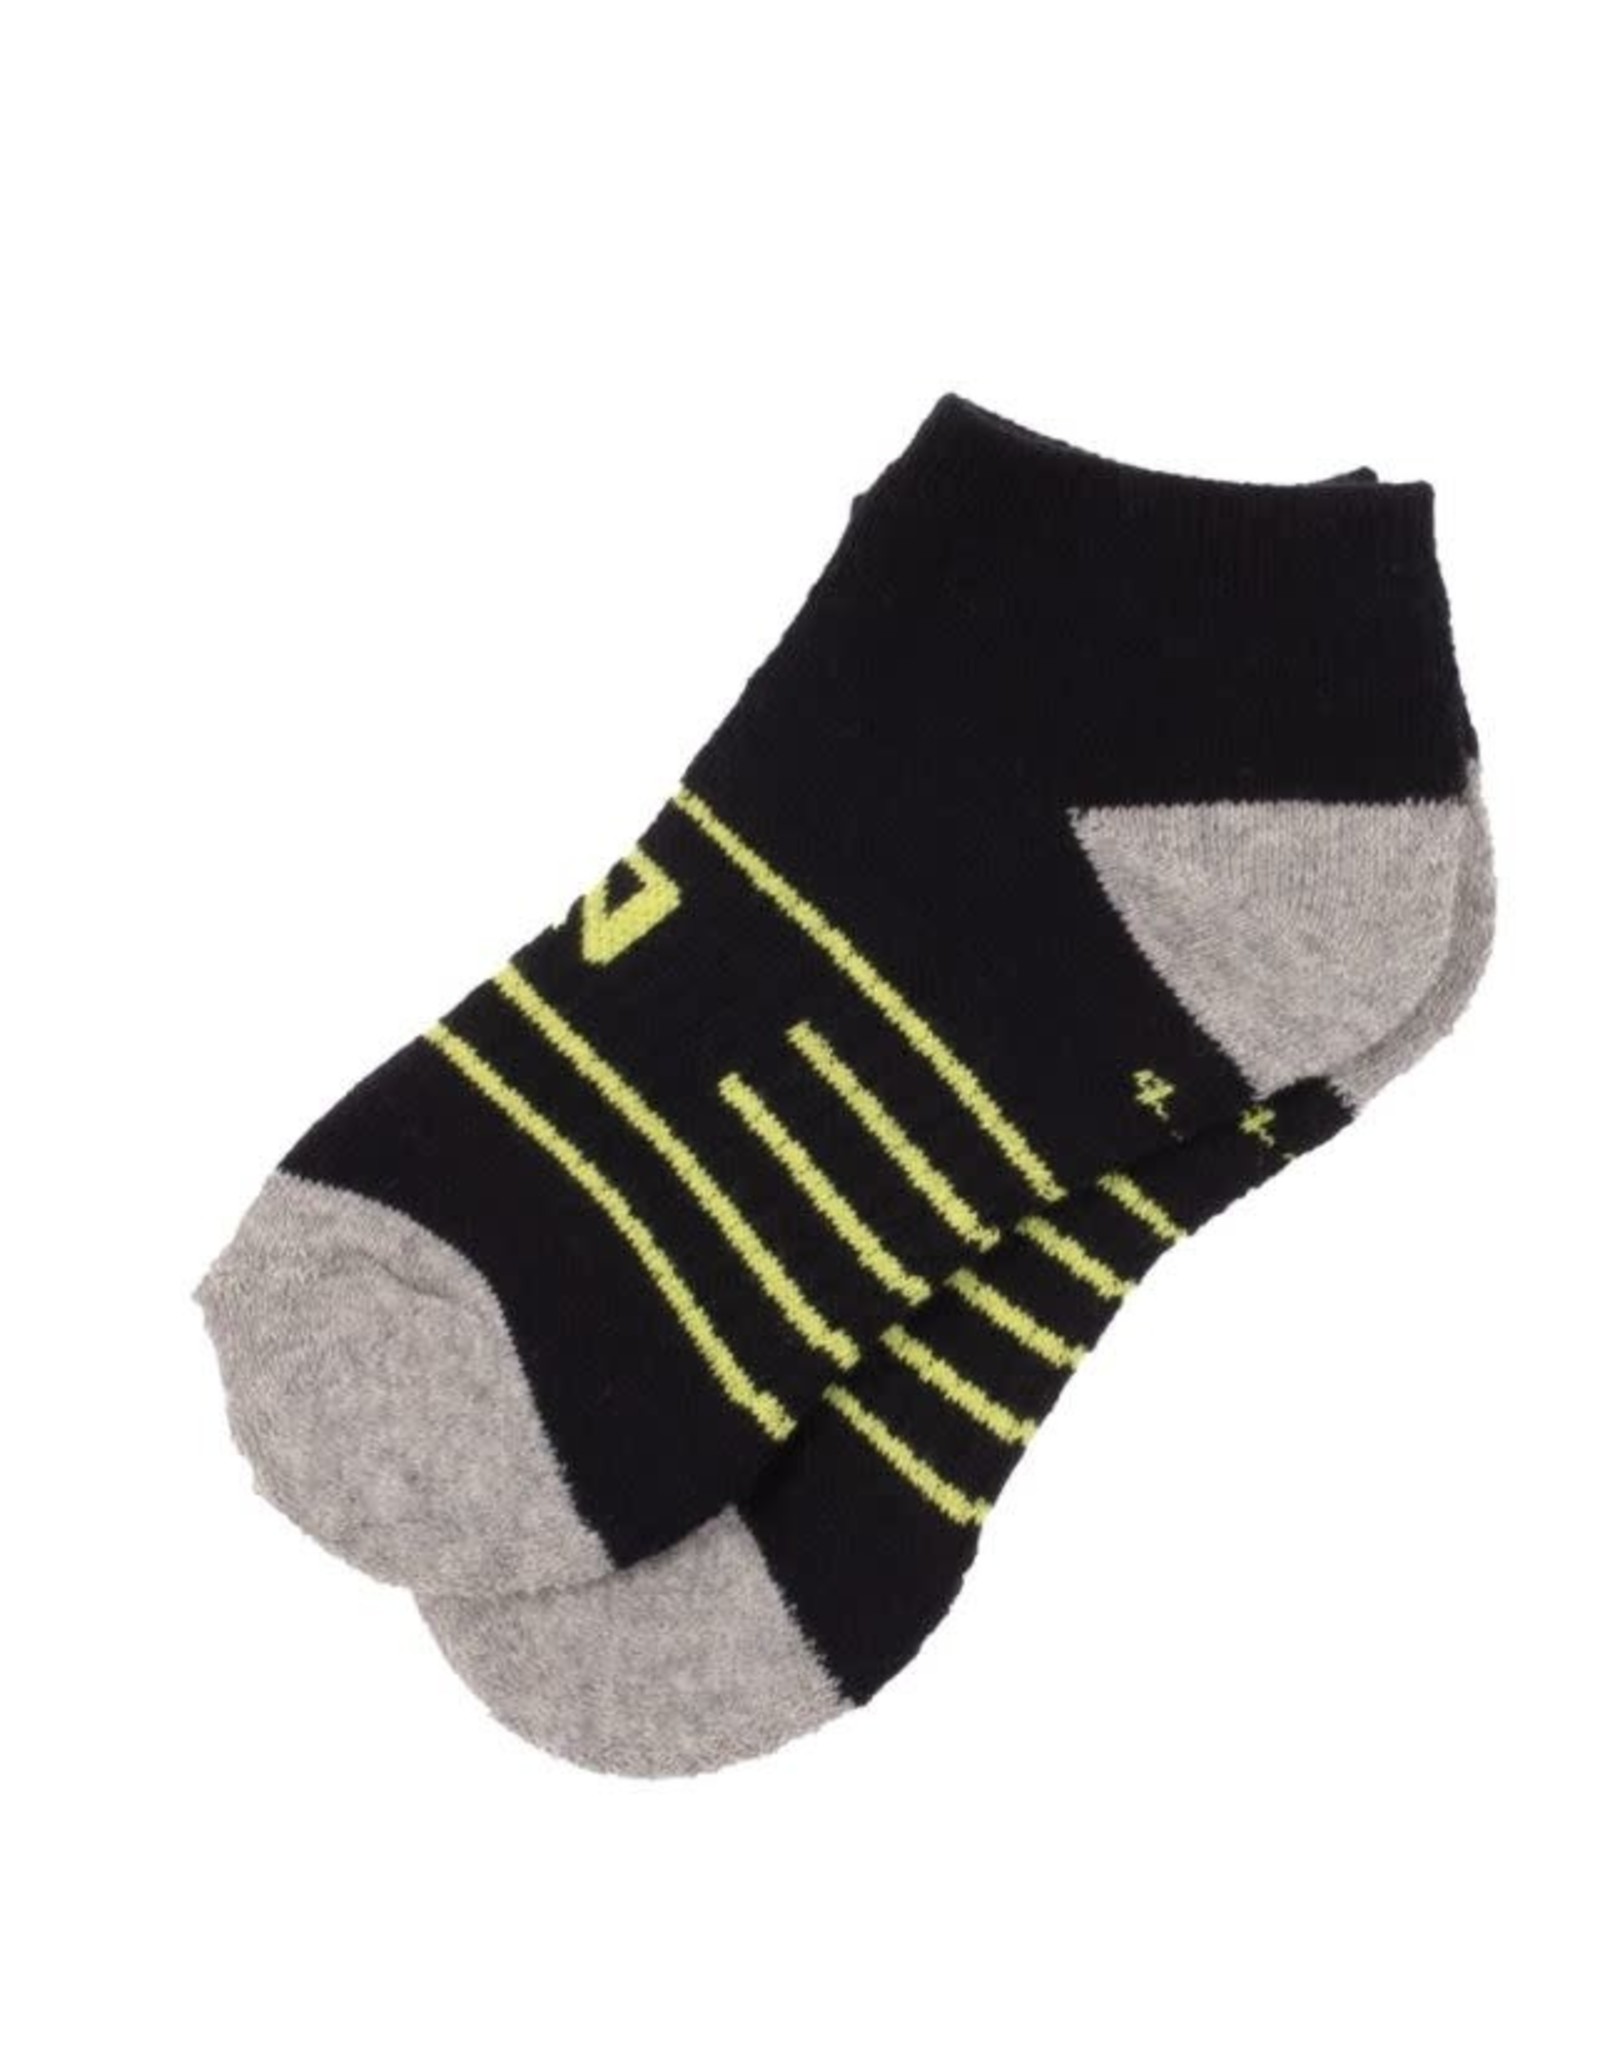 Noruk Athletic Ankle Socks